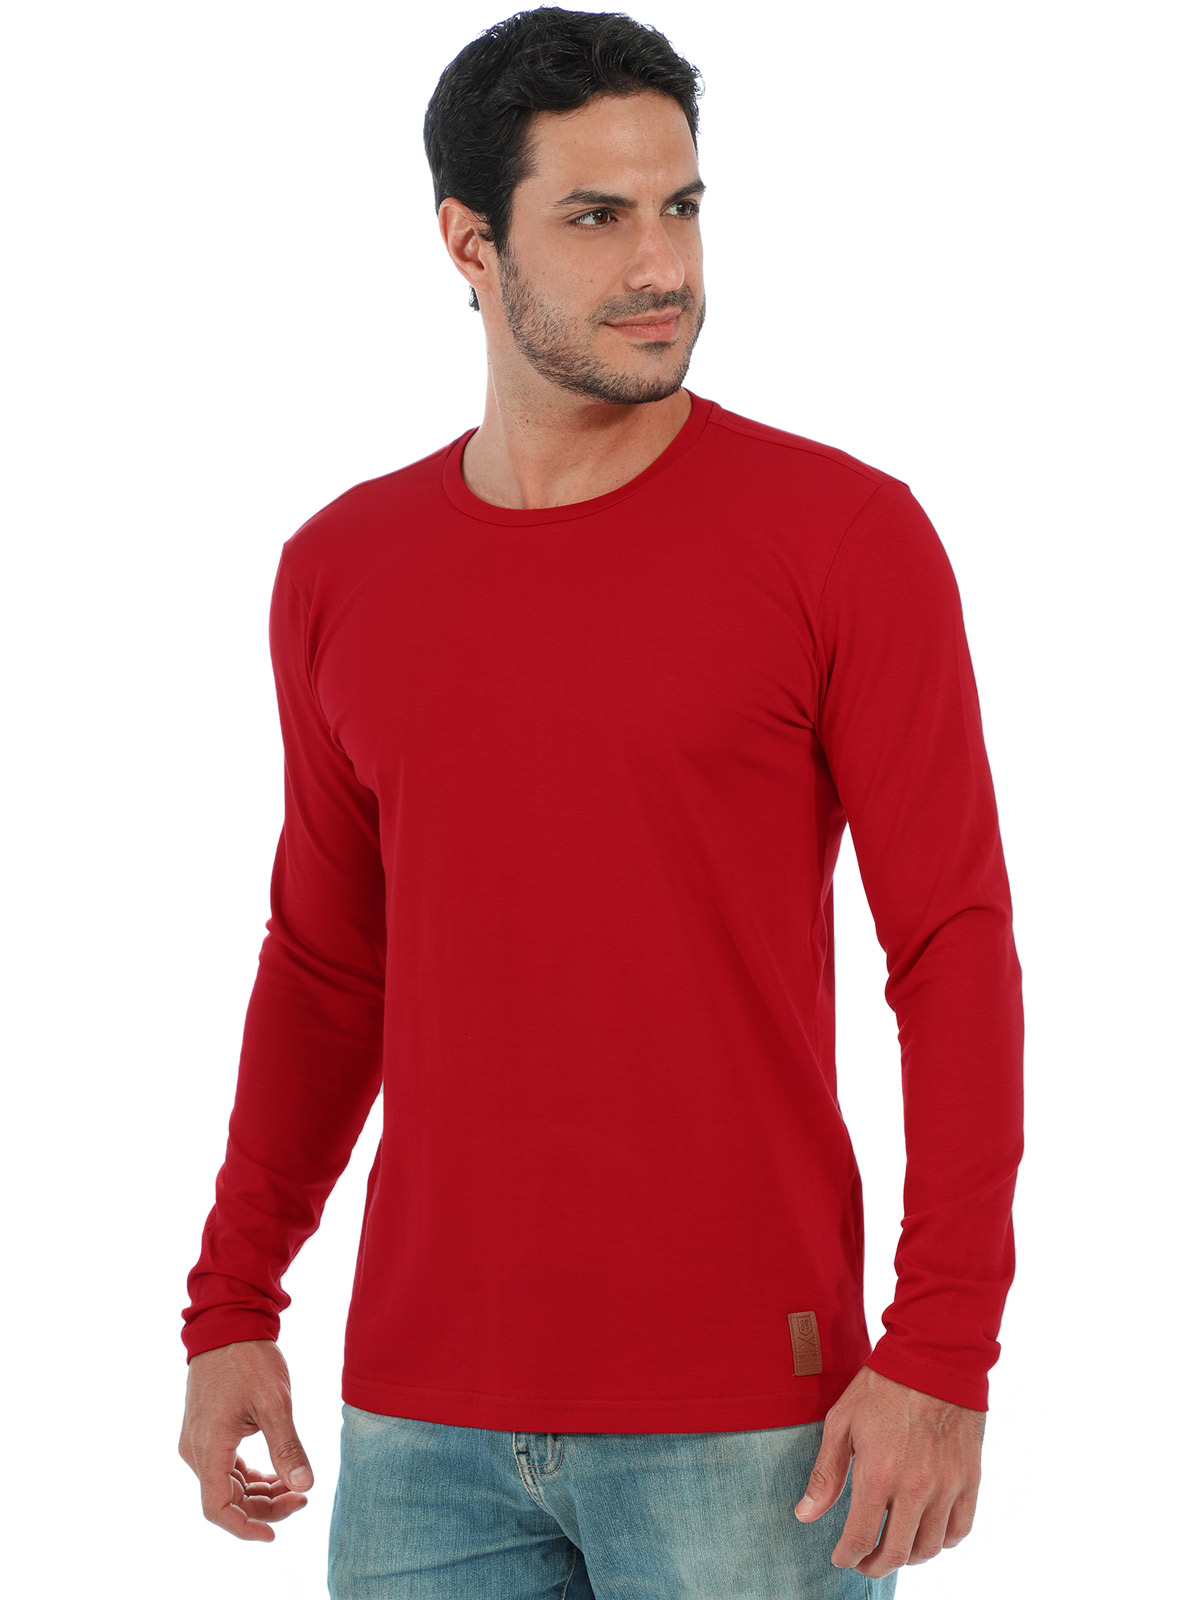 Camiseta Masculina Slim Com Elastano Manga Longa Vermelho